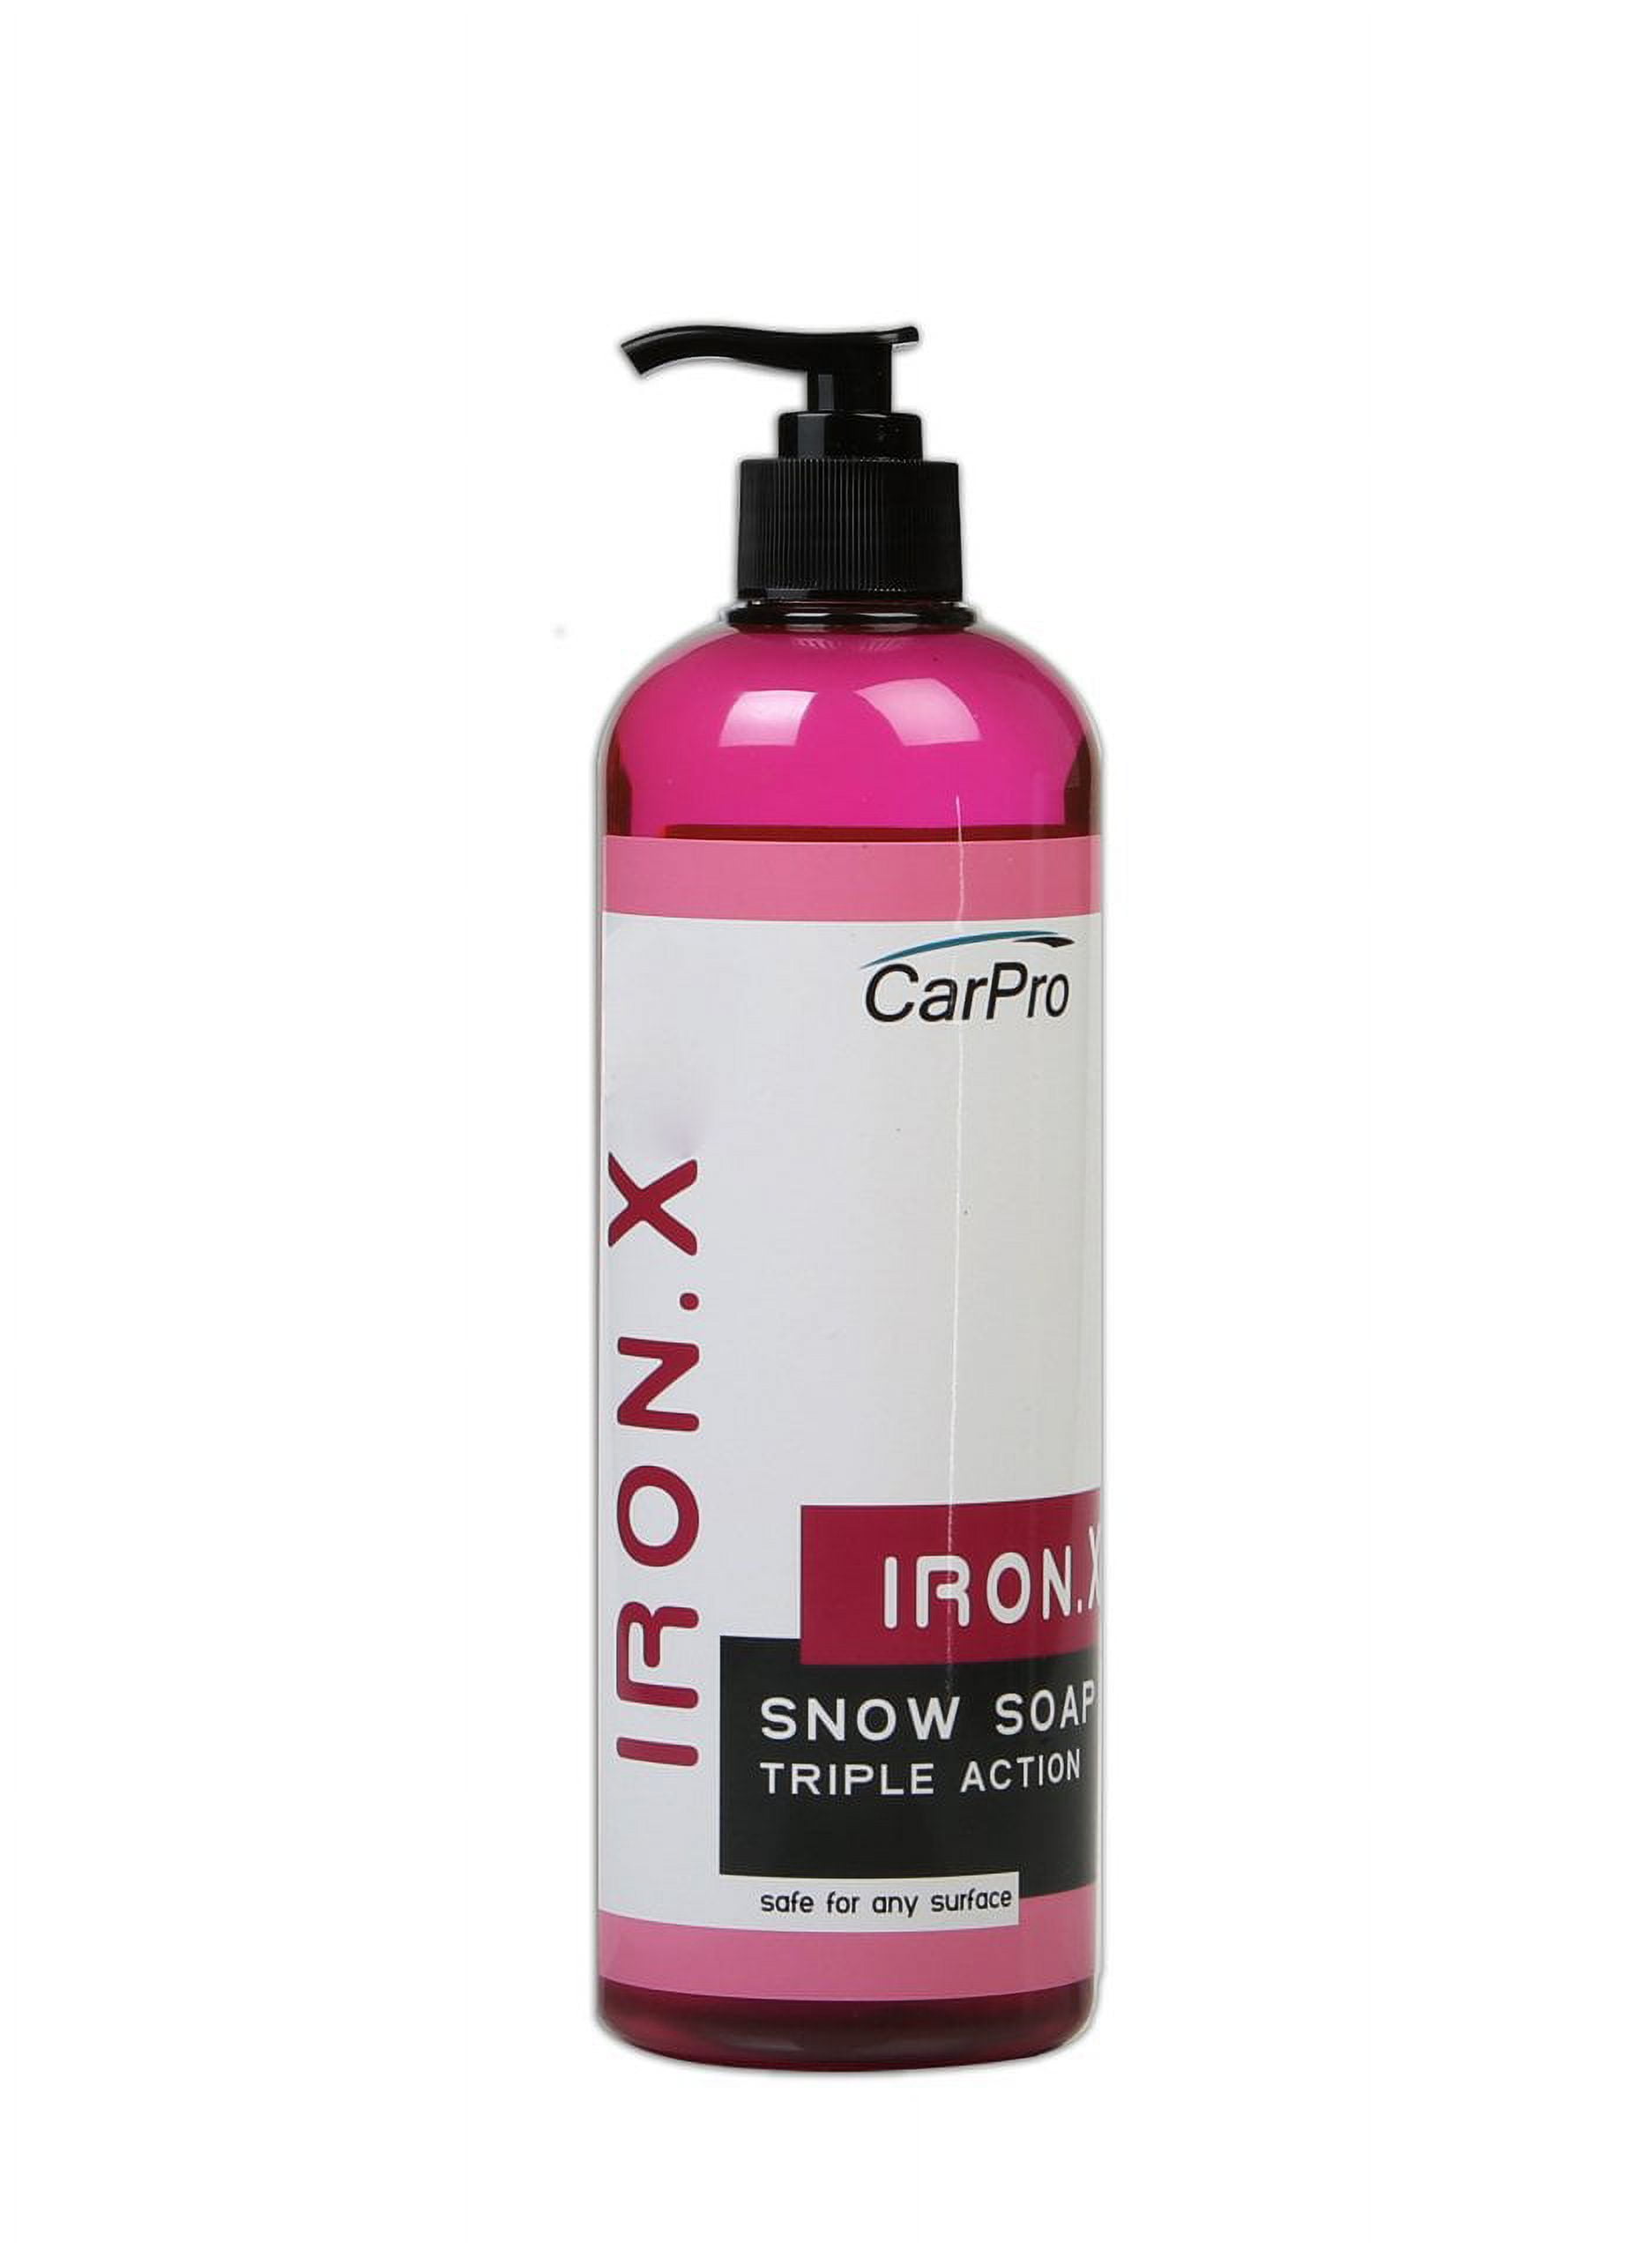 CarPro Iron X Snow Soap Review